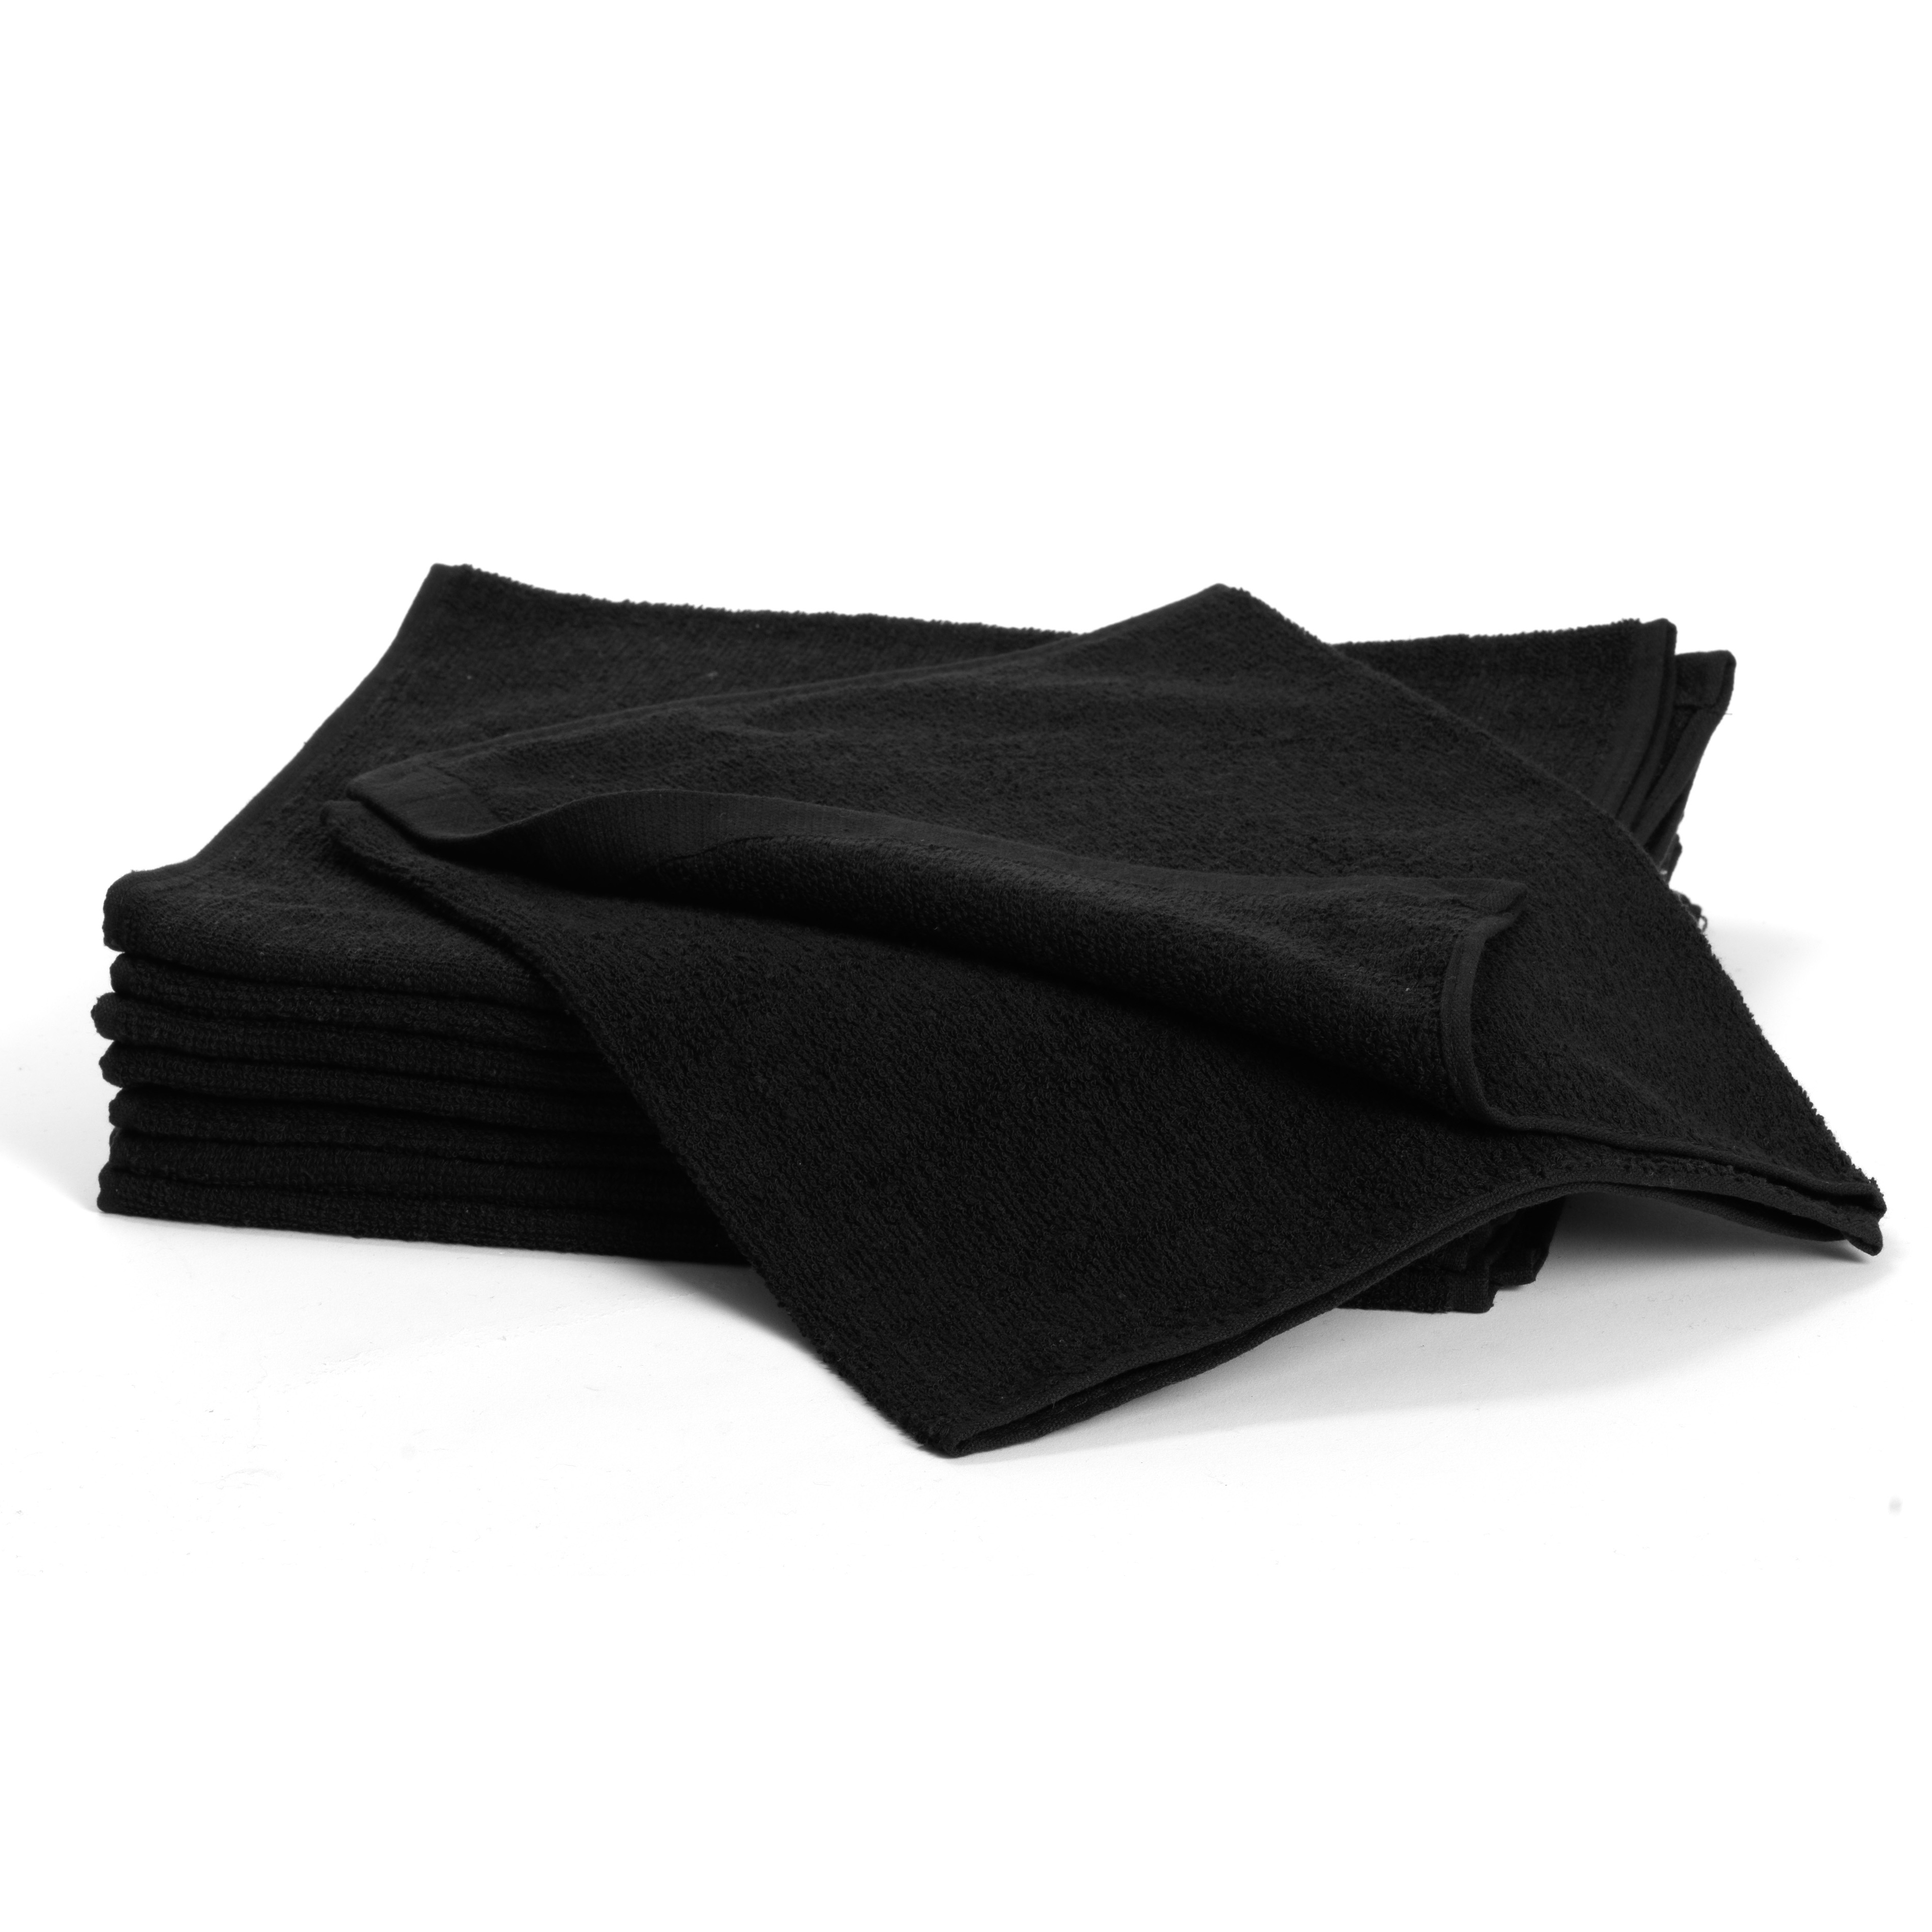 Cotton Towels, black 5097 - bavlnený uterák, čierny, 34 x 82 cm, 1 ks